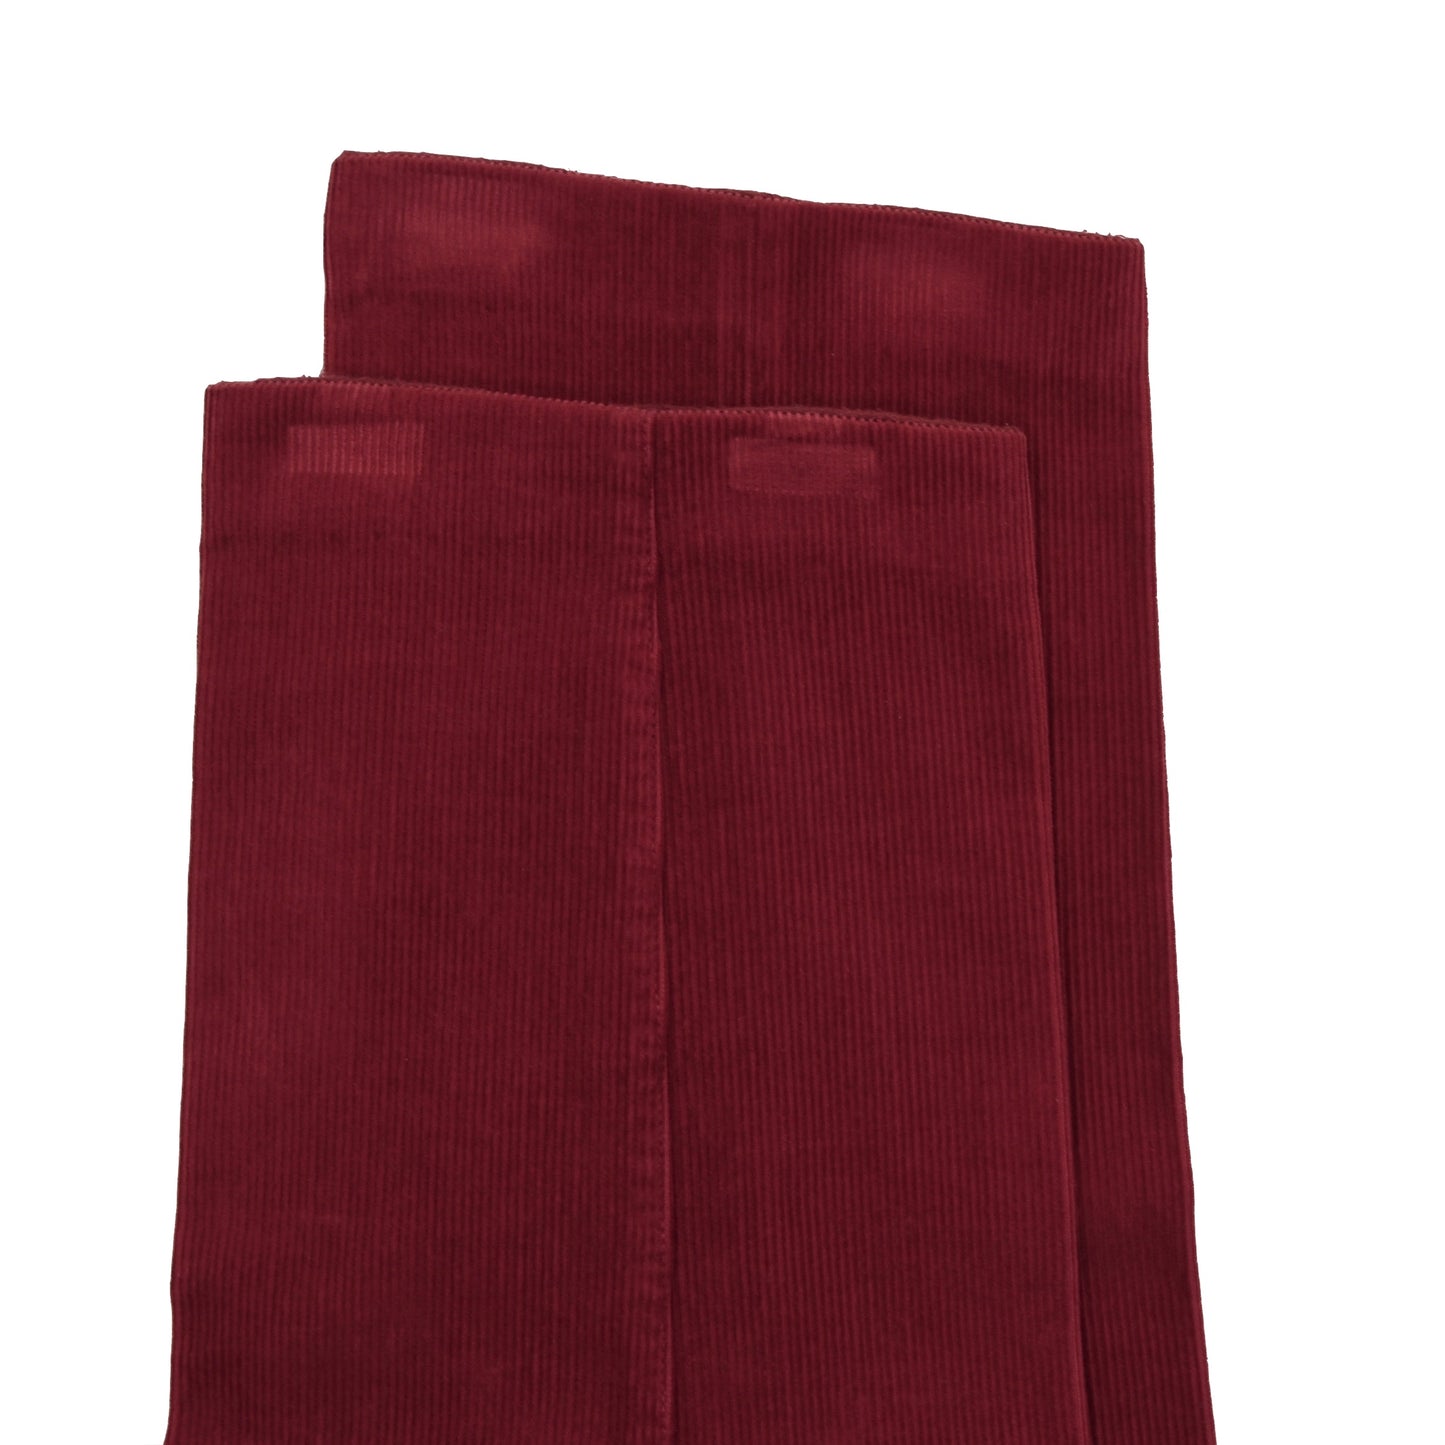 Knize Wien Corduroy Pants Size 54 - Red